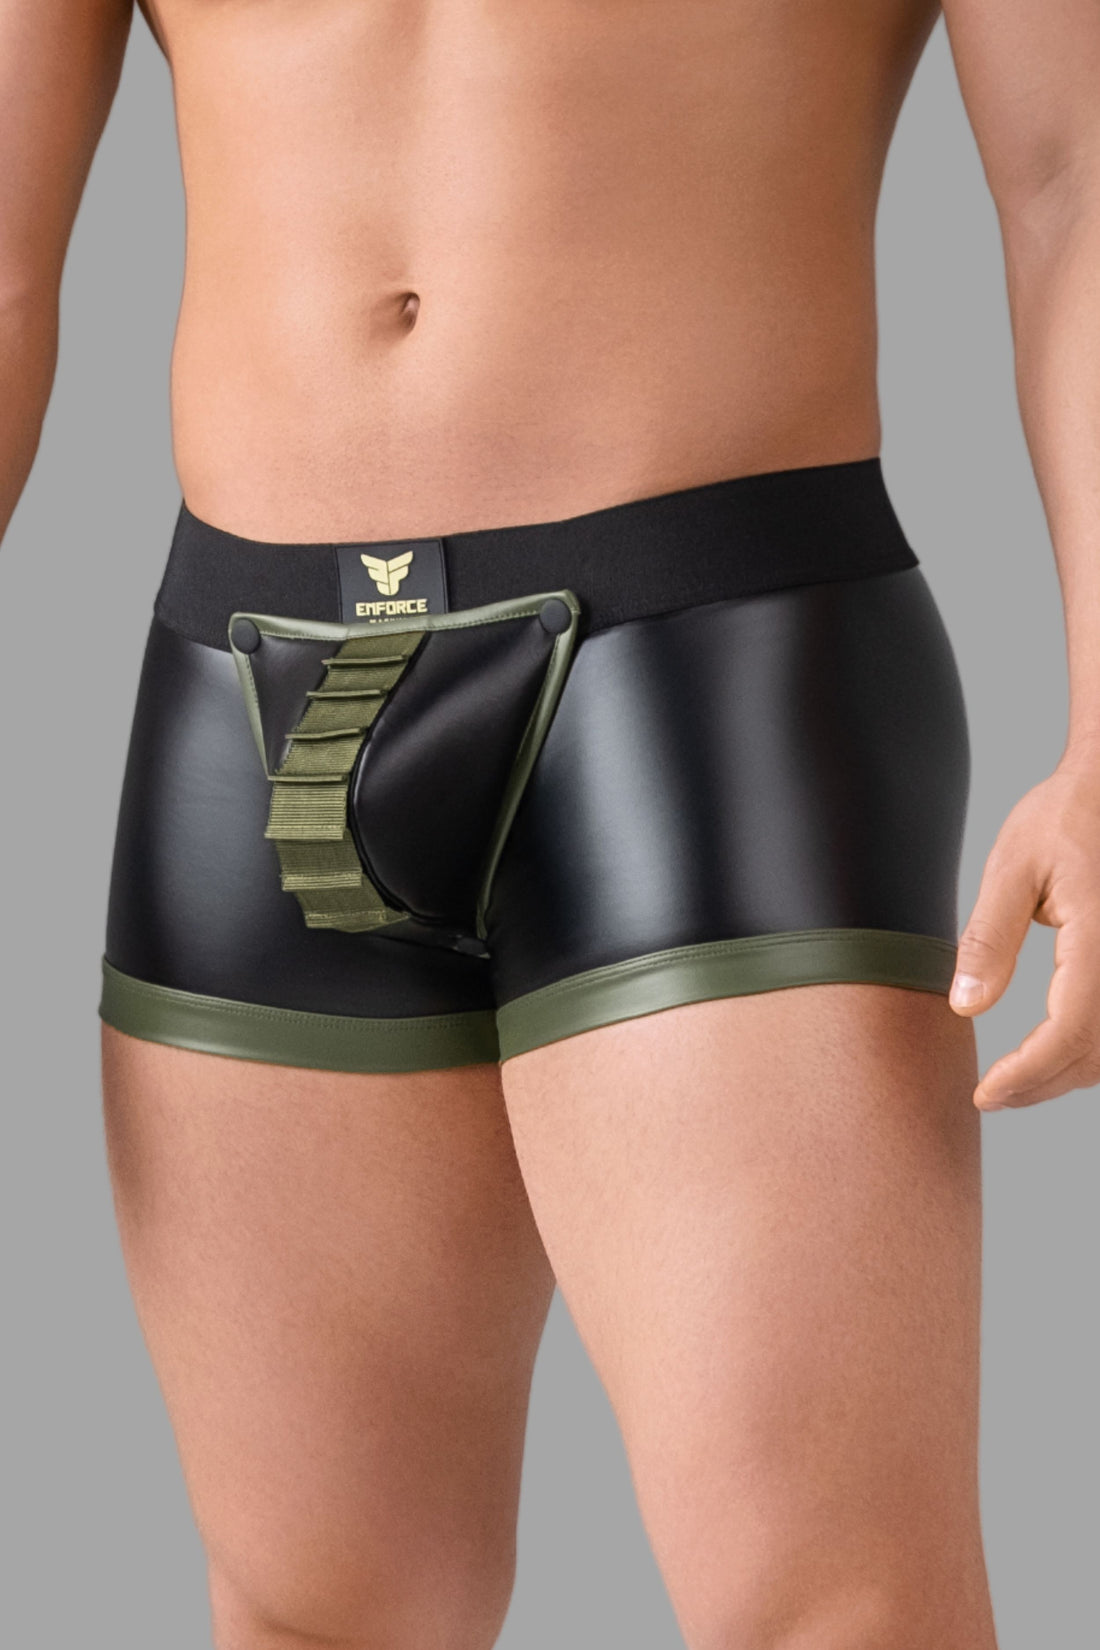 Eagle Enforce Trunk Shorts, zipper